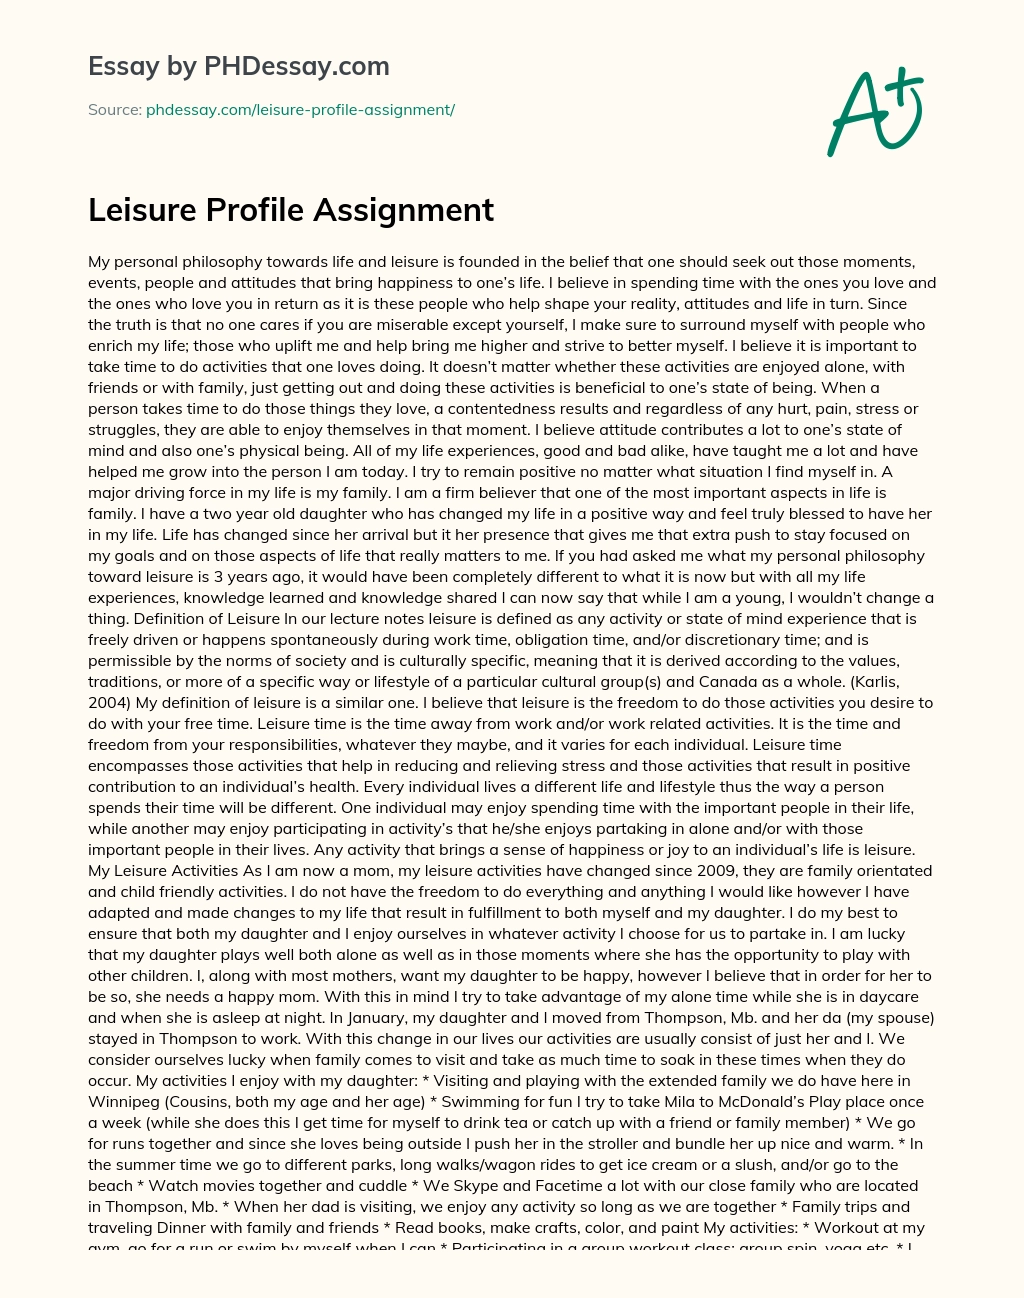 Leisure Profile Assignment essay